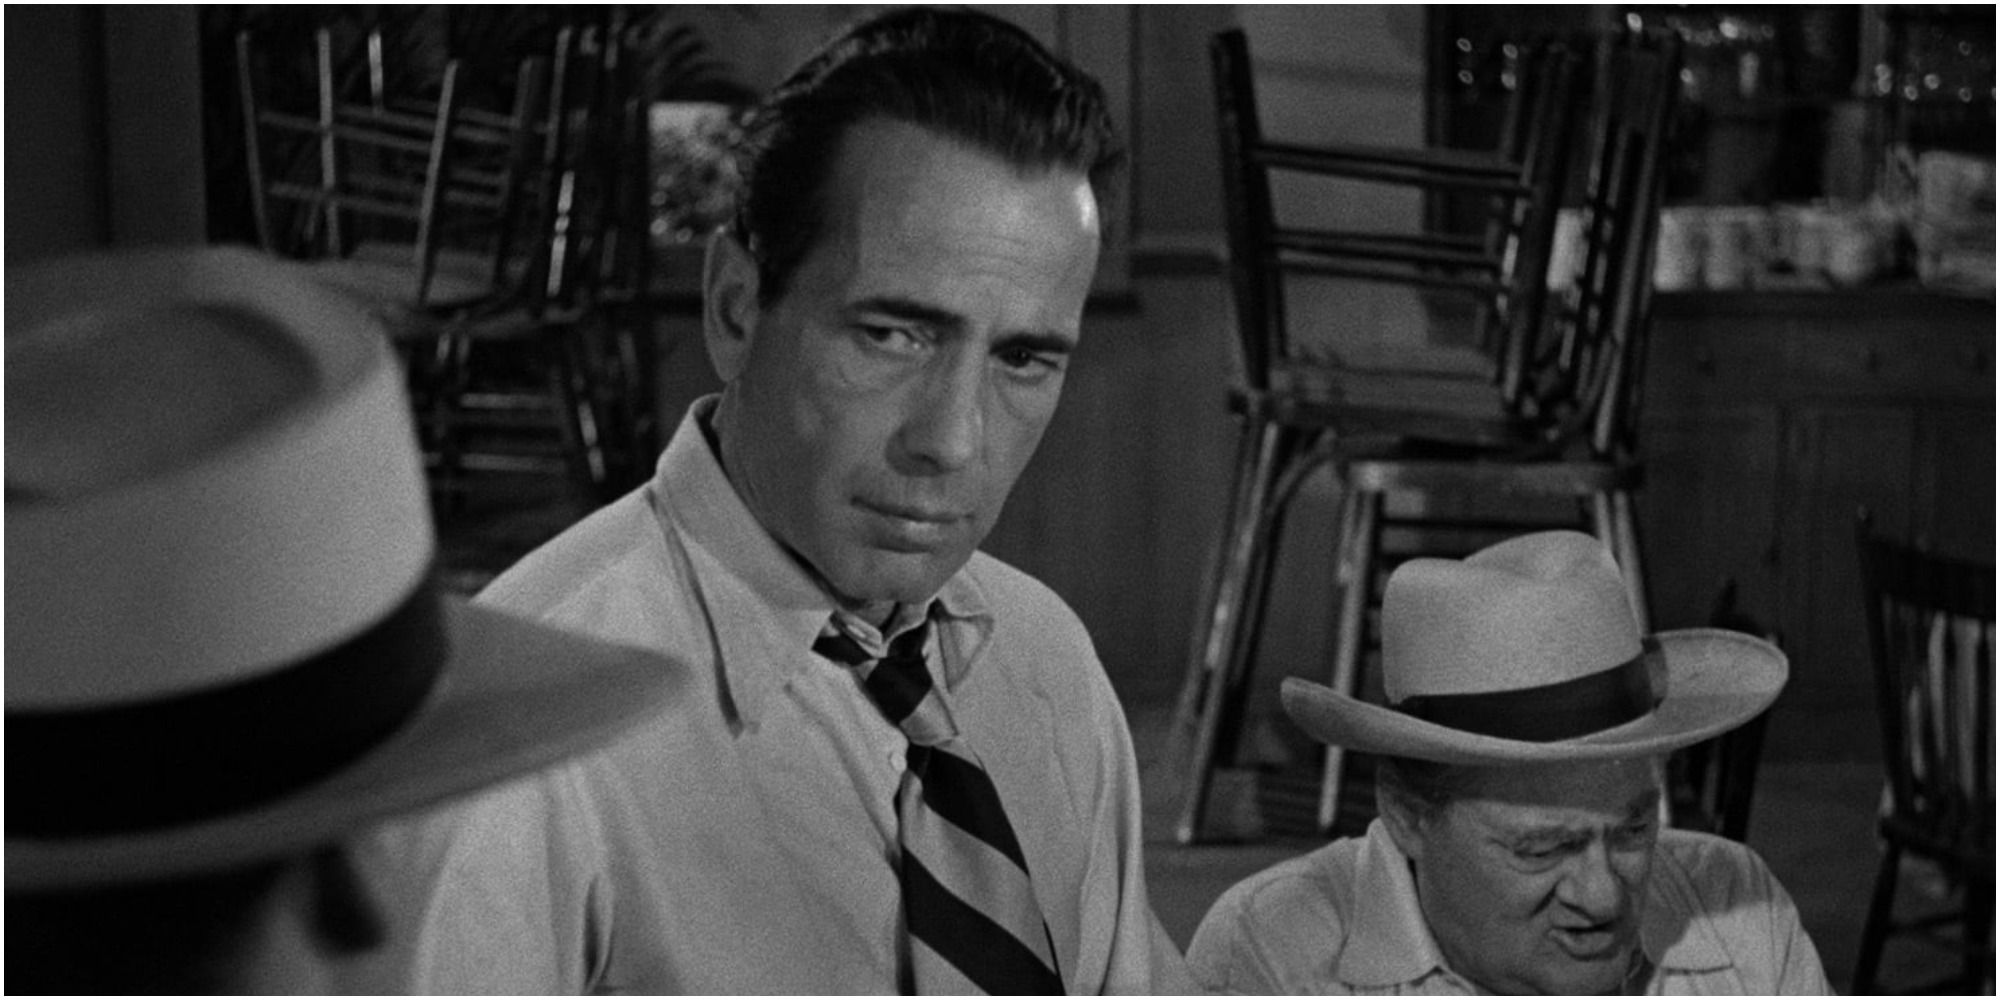 Humphrey Bogart in Key Largo looking at someone off camera.